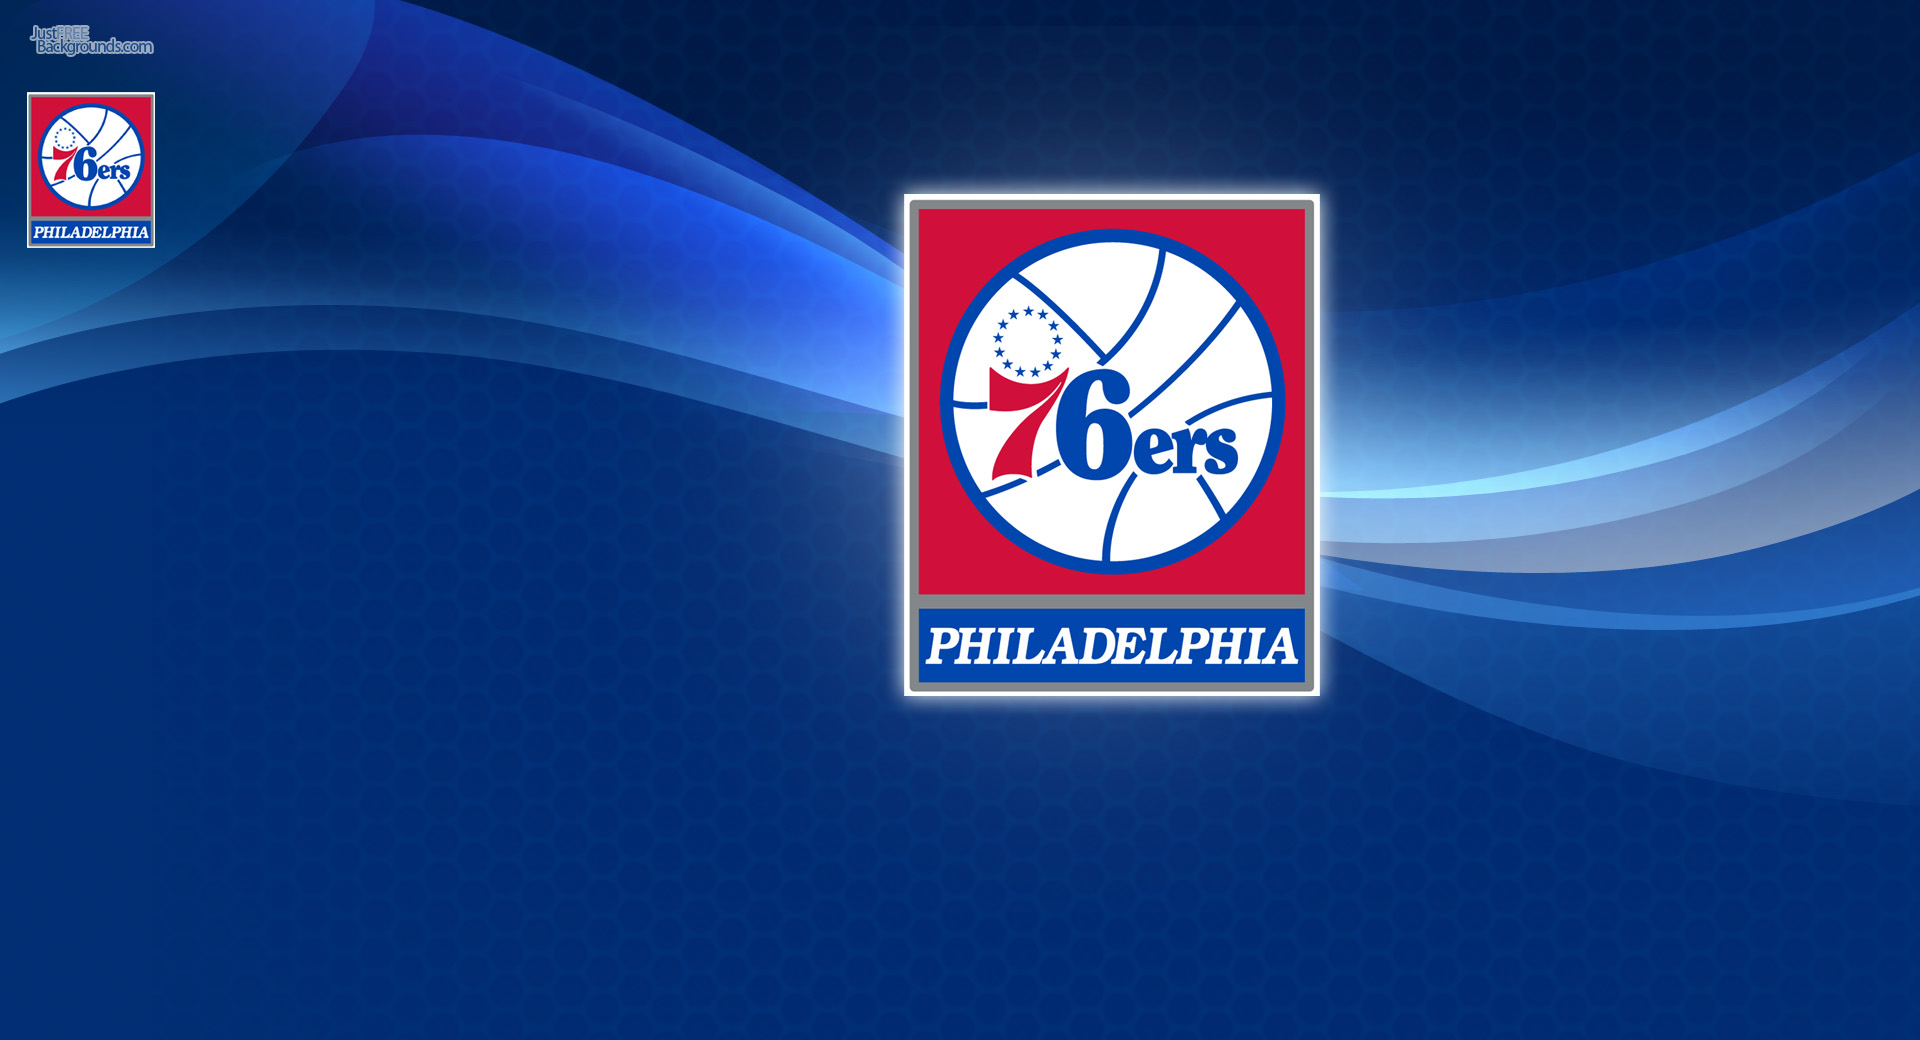 Philadelphia 76ers Nba Basketball Wallpaper Background